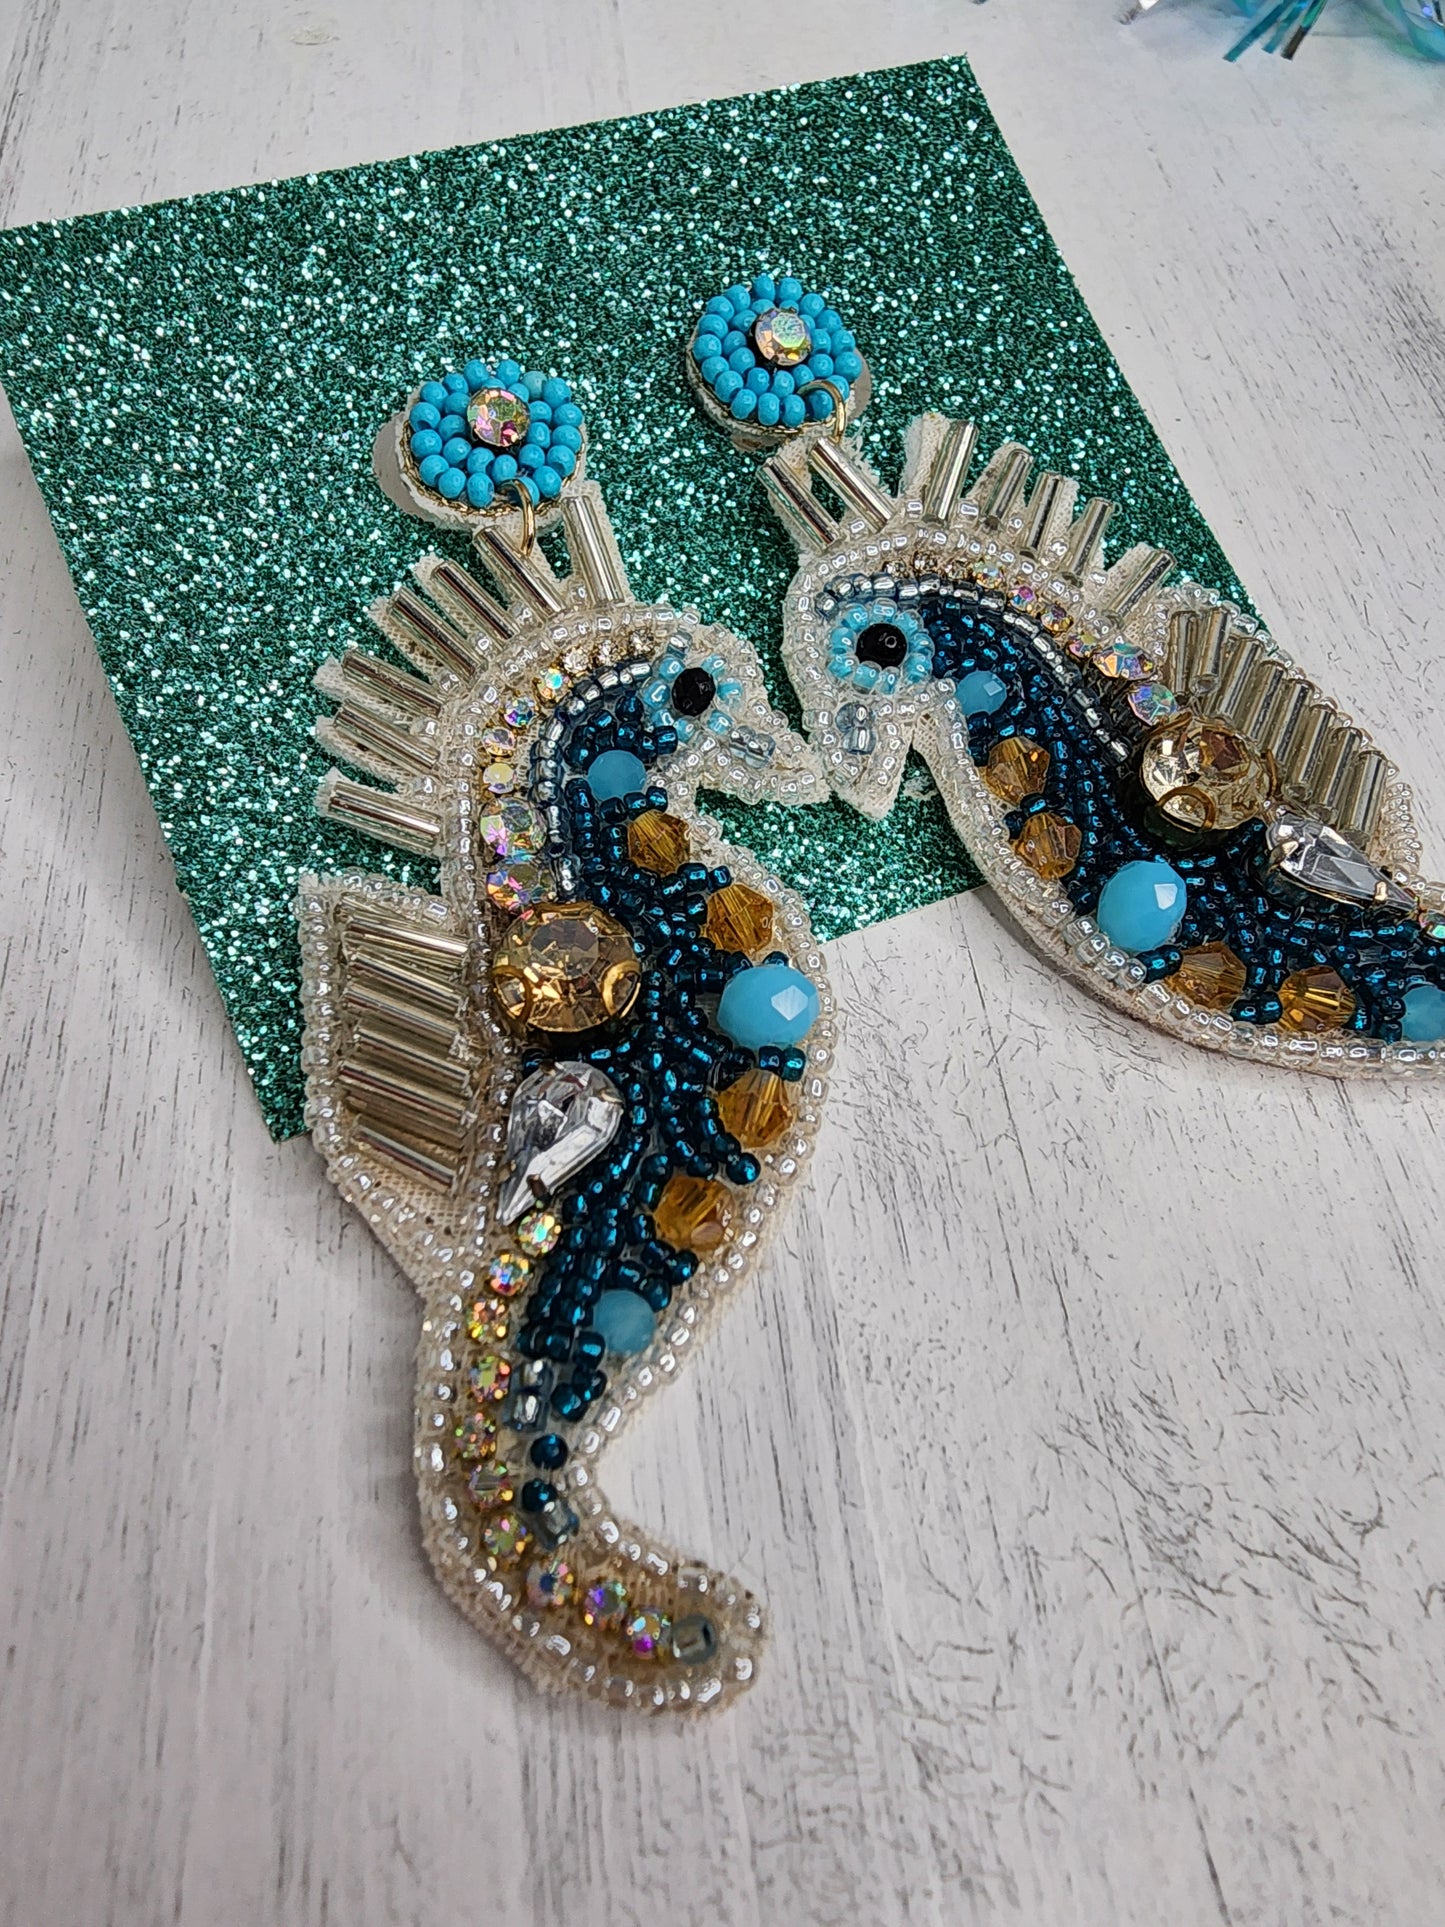 Beaded Sea Horse Earrings